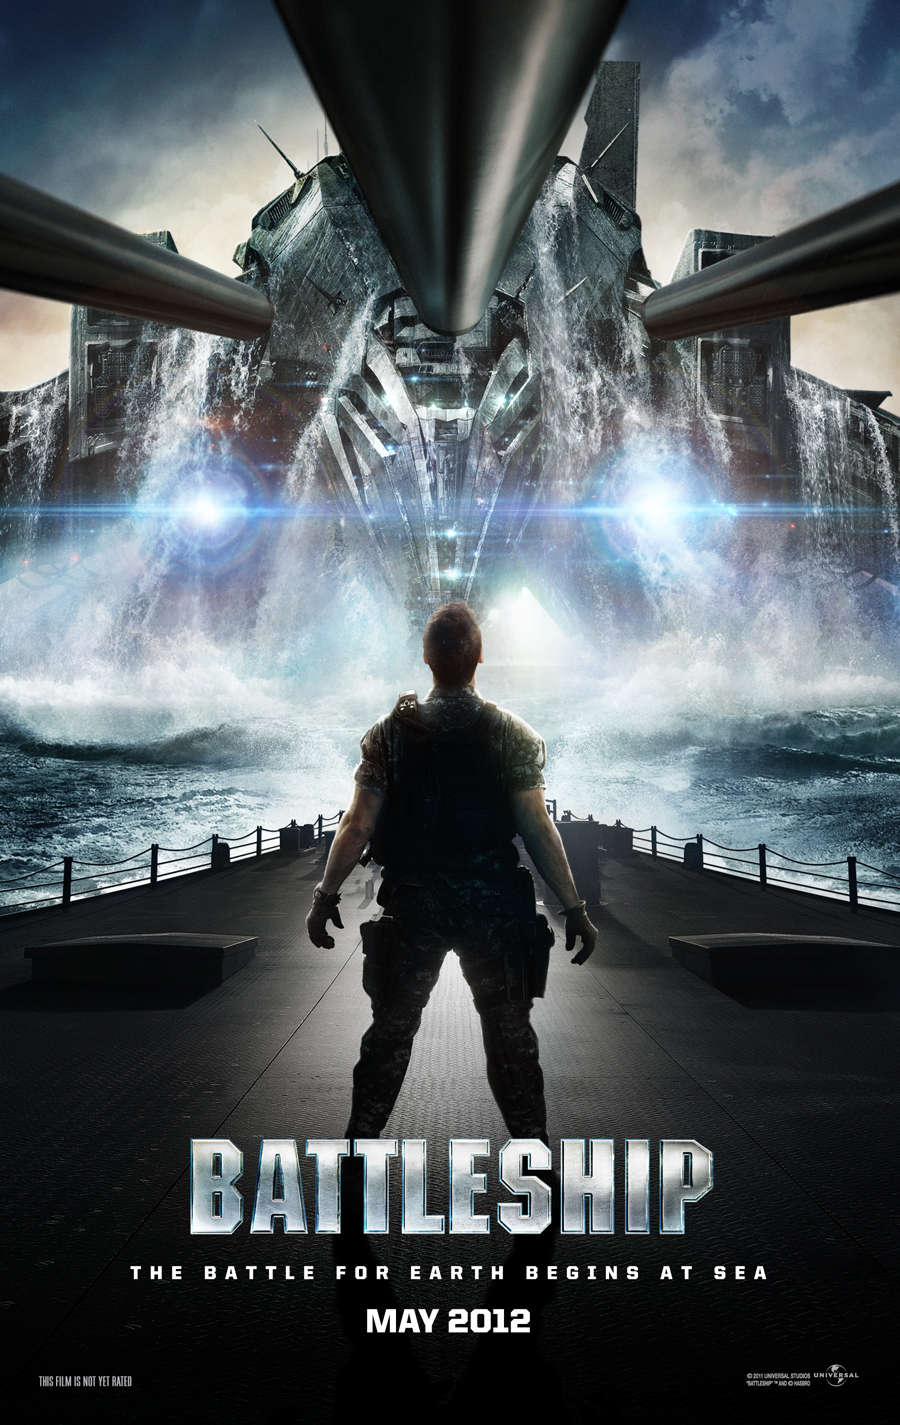 battleship-movie-poster-large-02.jpg